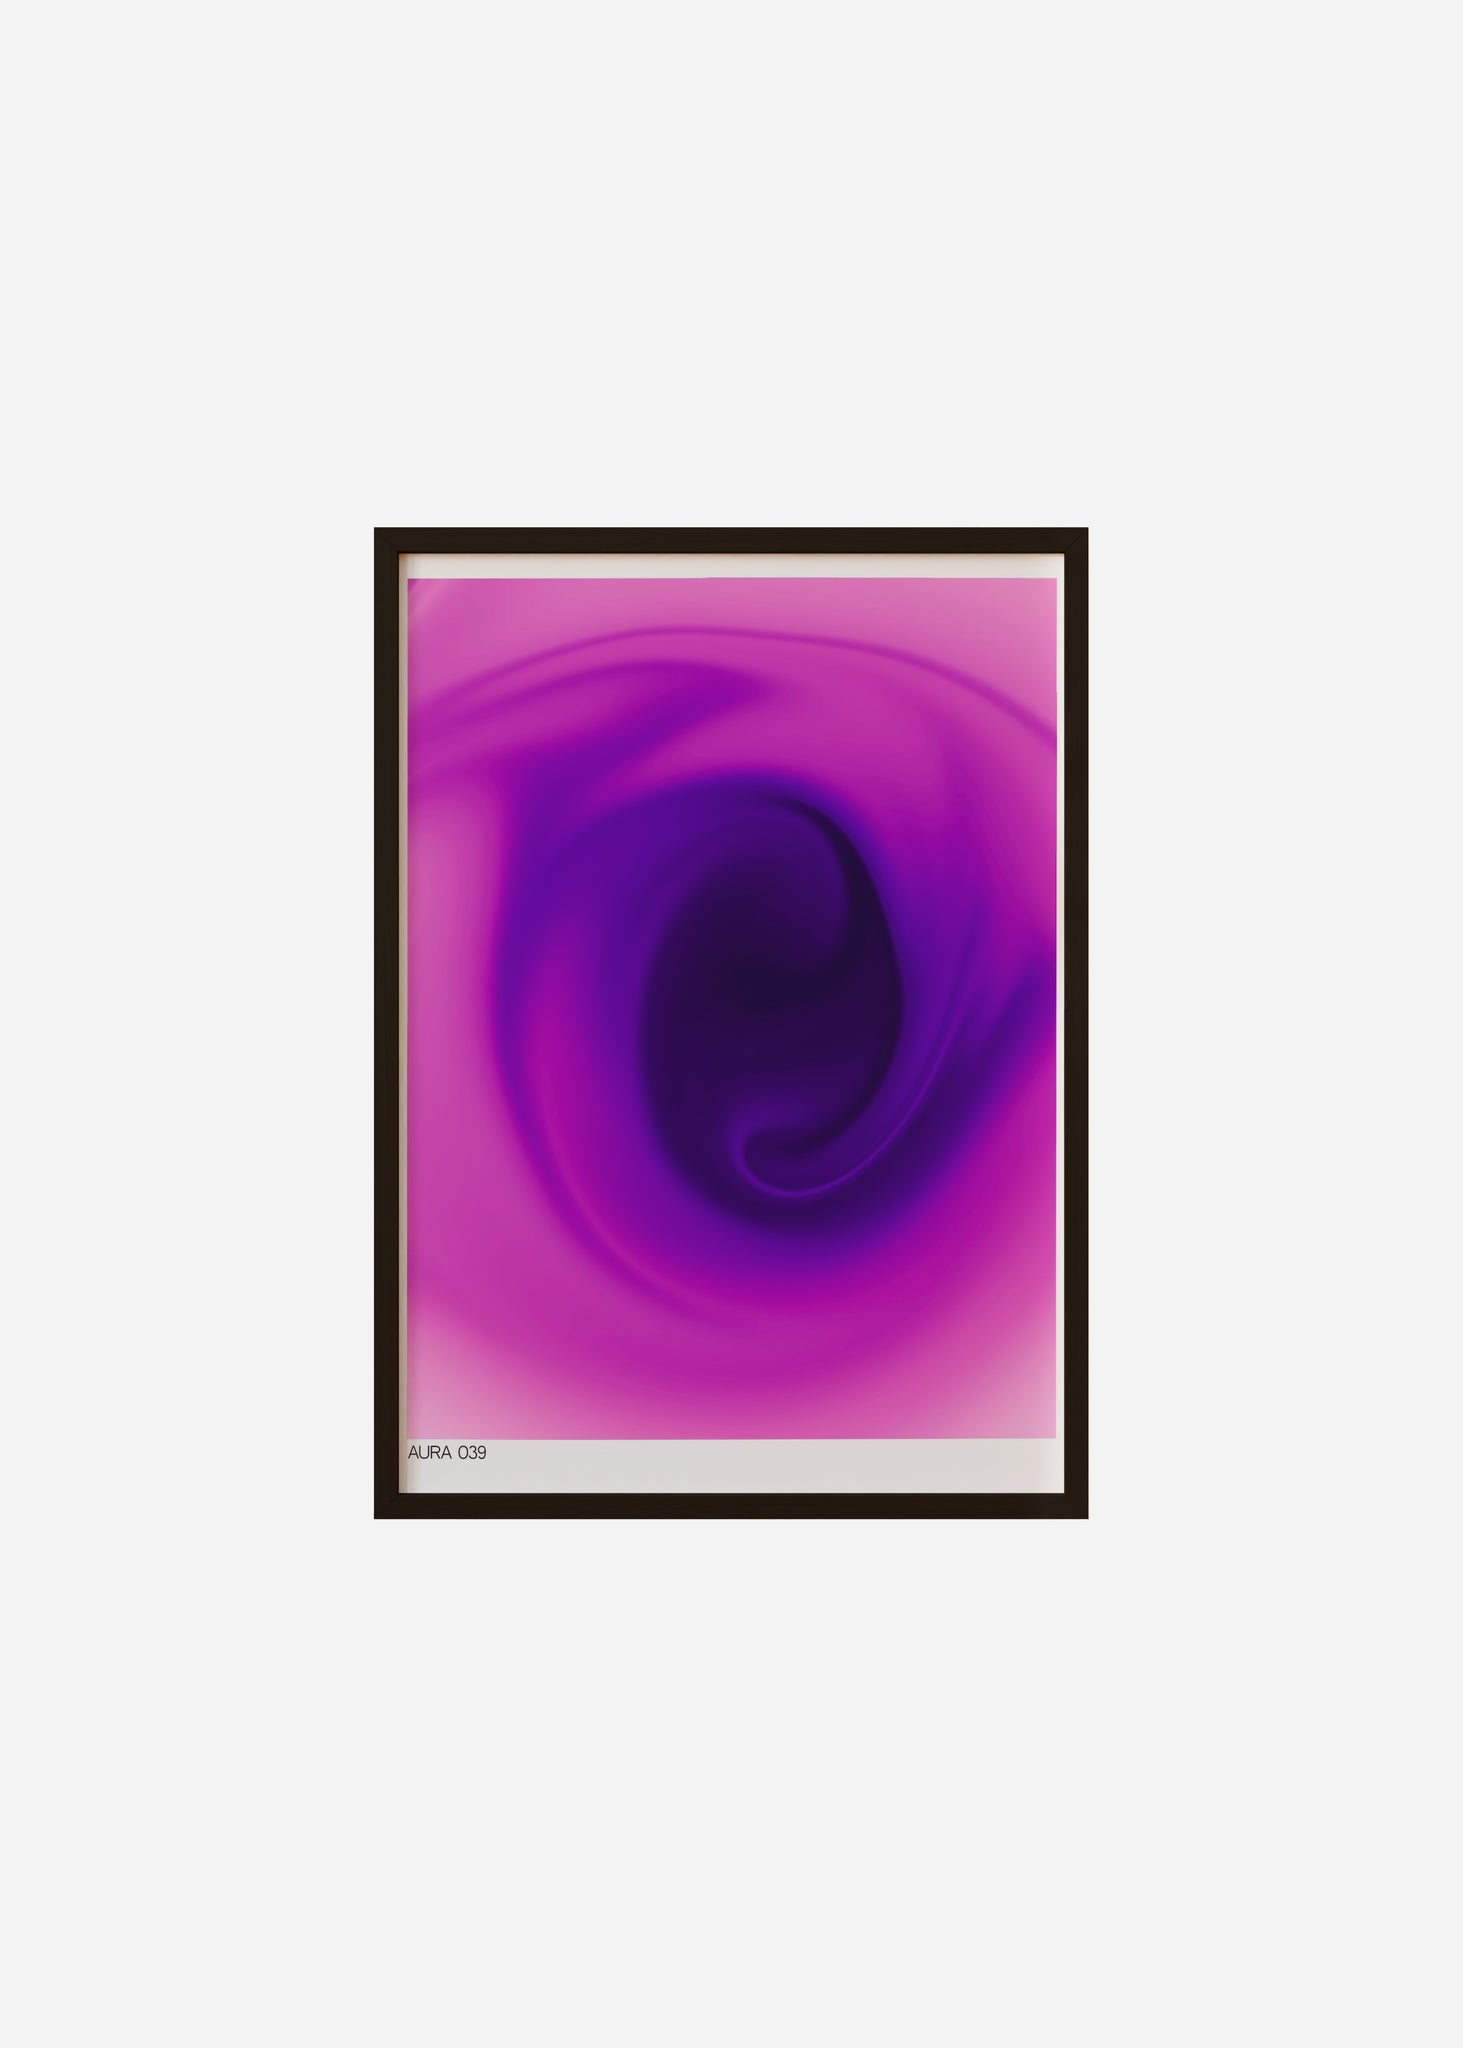 aura 039 Framed Print